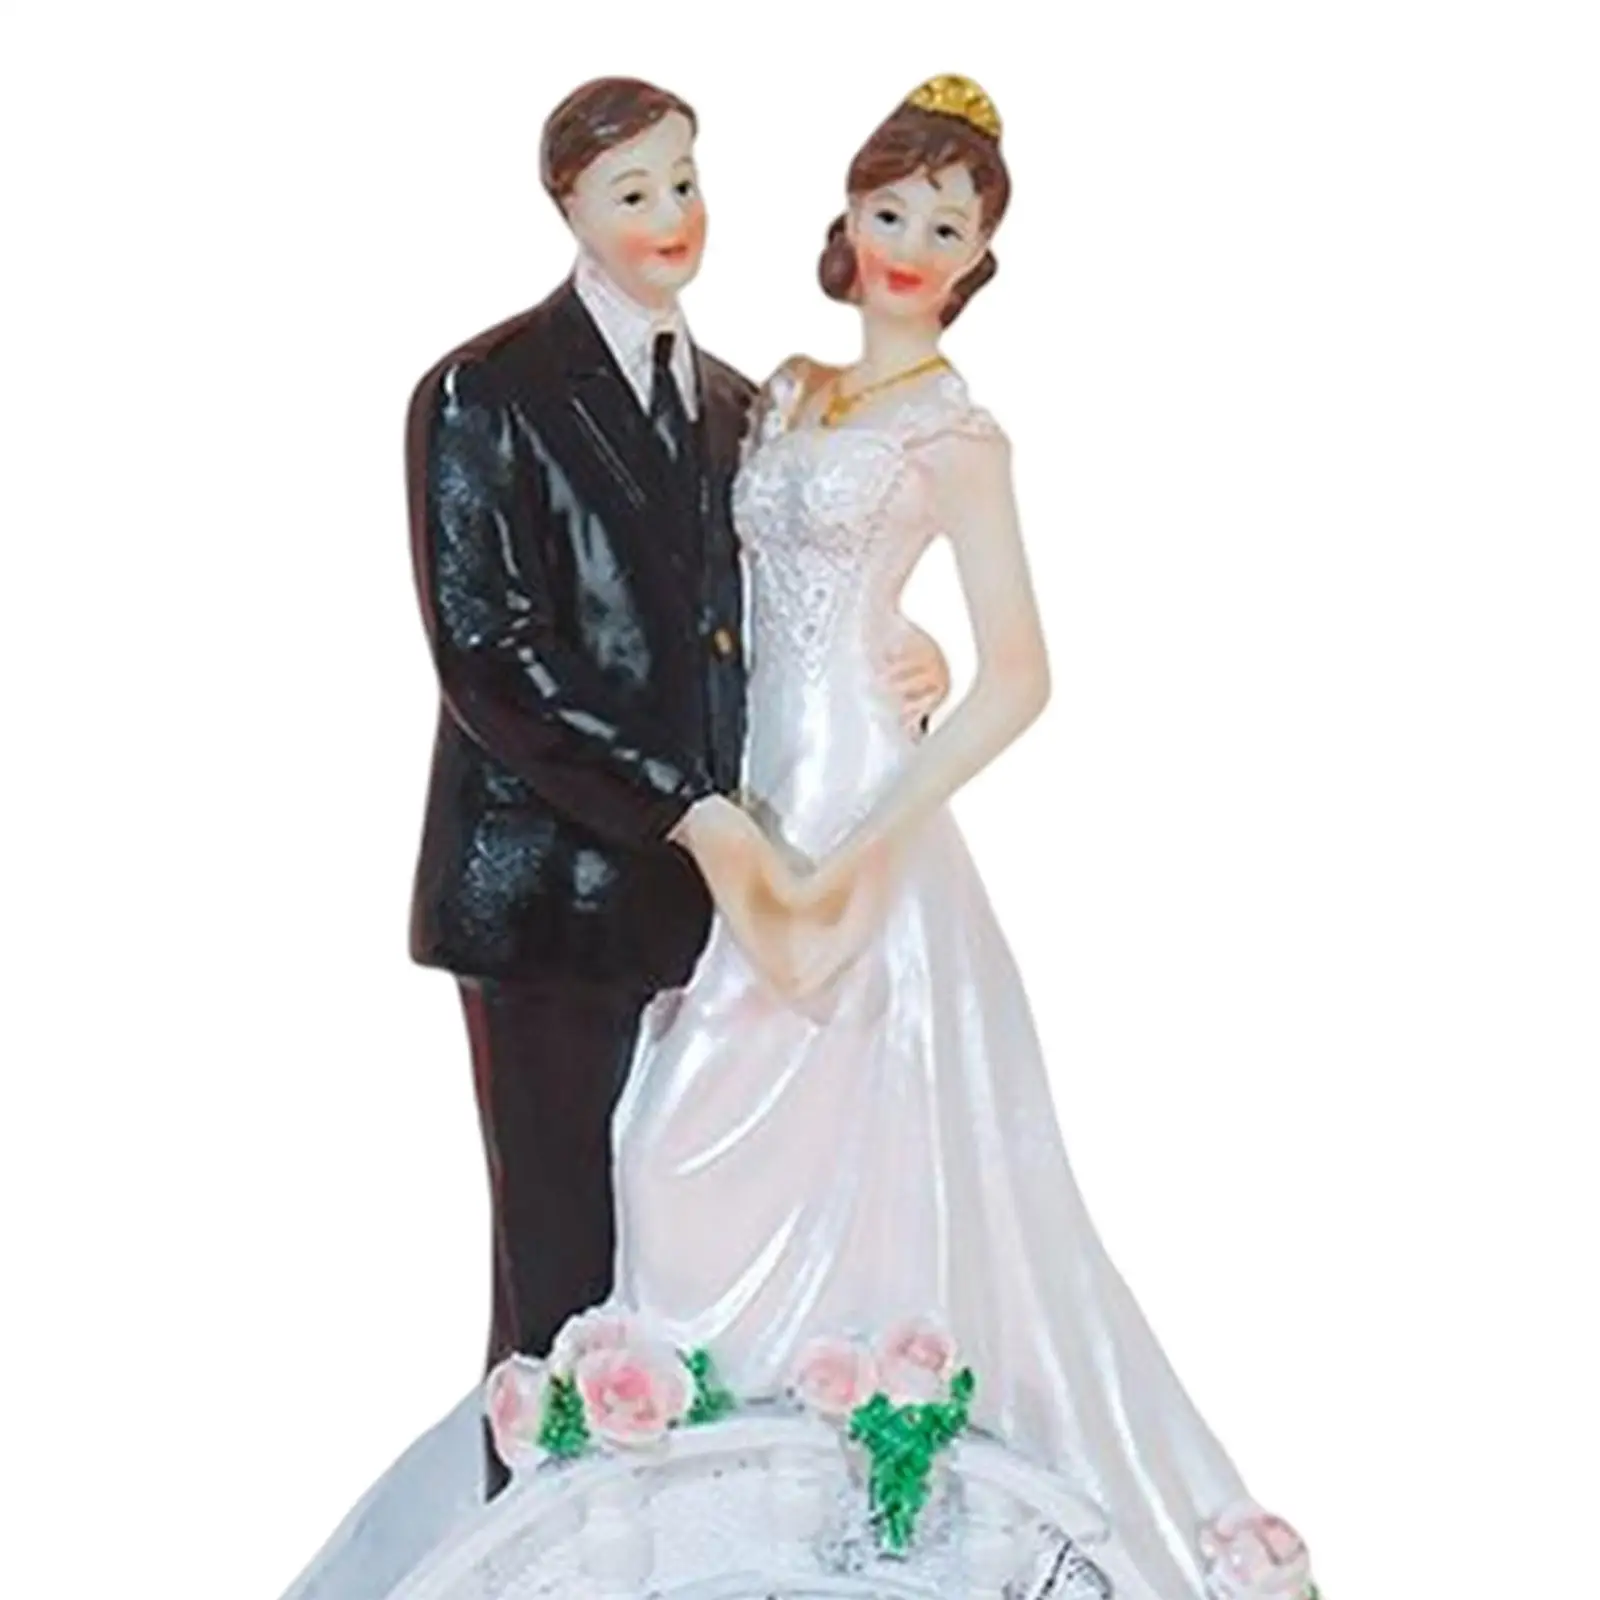 Wedding Cake Topper Romantic Unique Couple Figures Decorations Gift Bride Groom